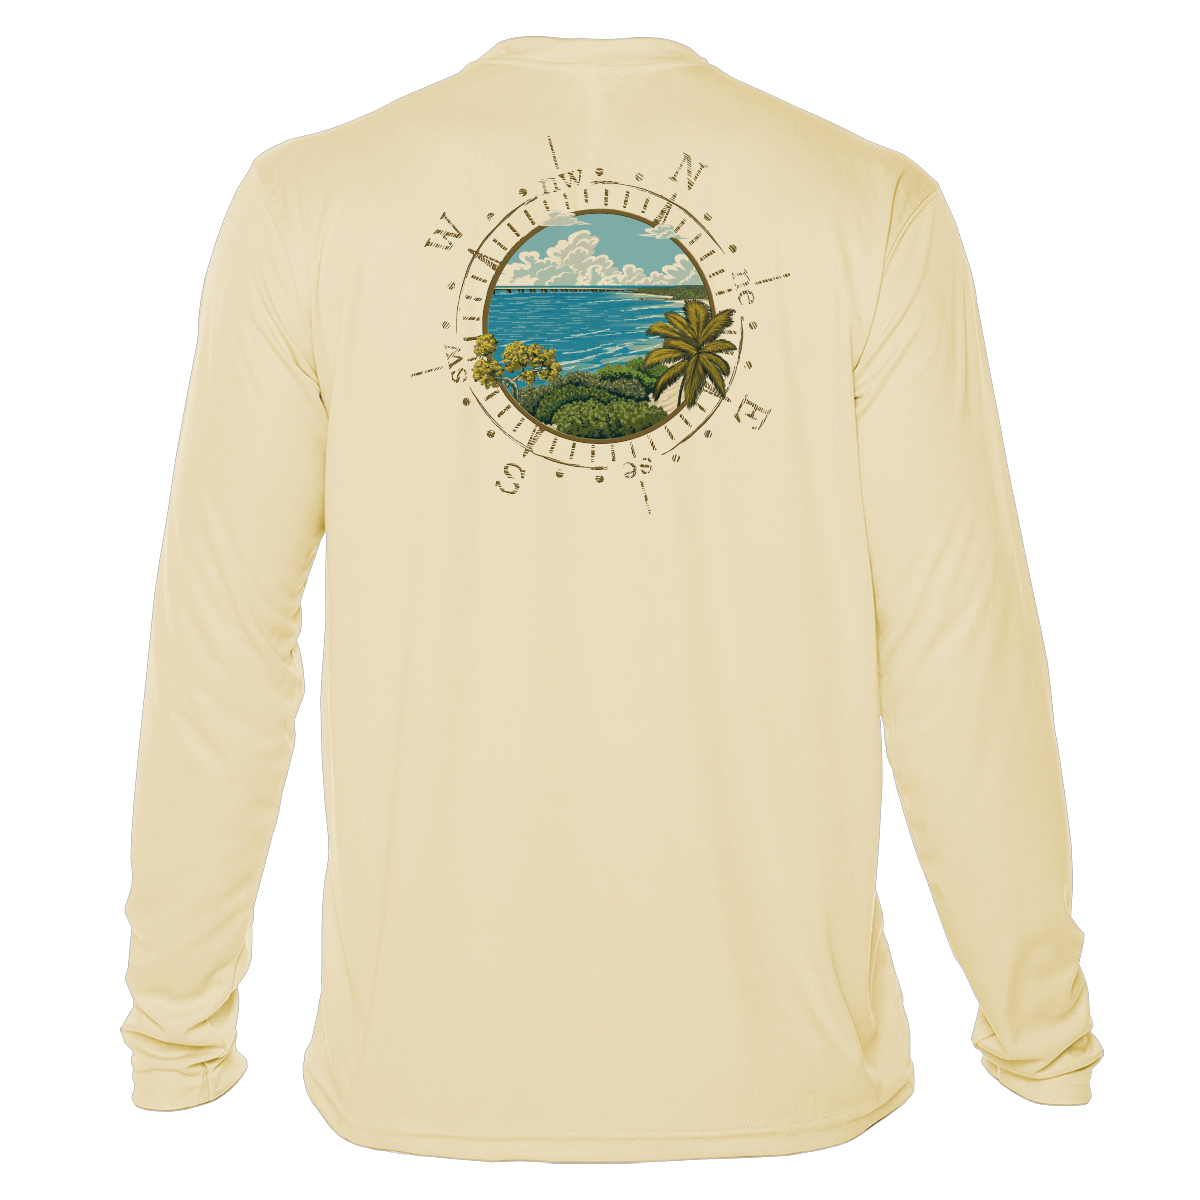 Key West Sun Shirts - Compass to Bahia Honda Key - UPF 50+ Long Sleeve